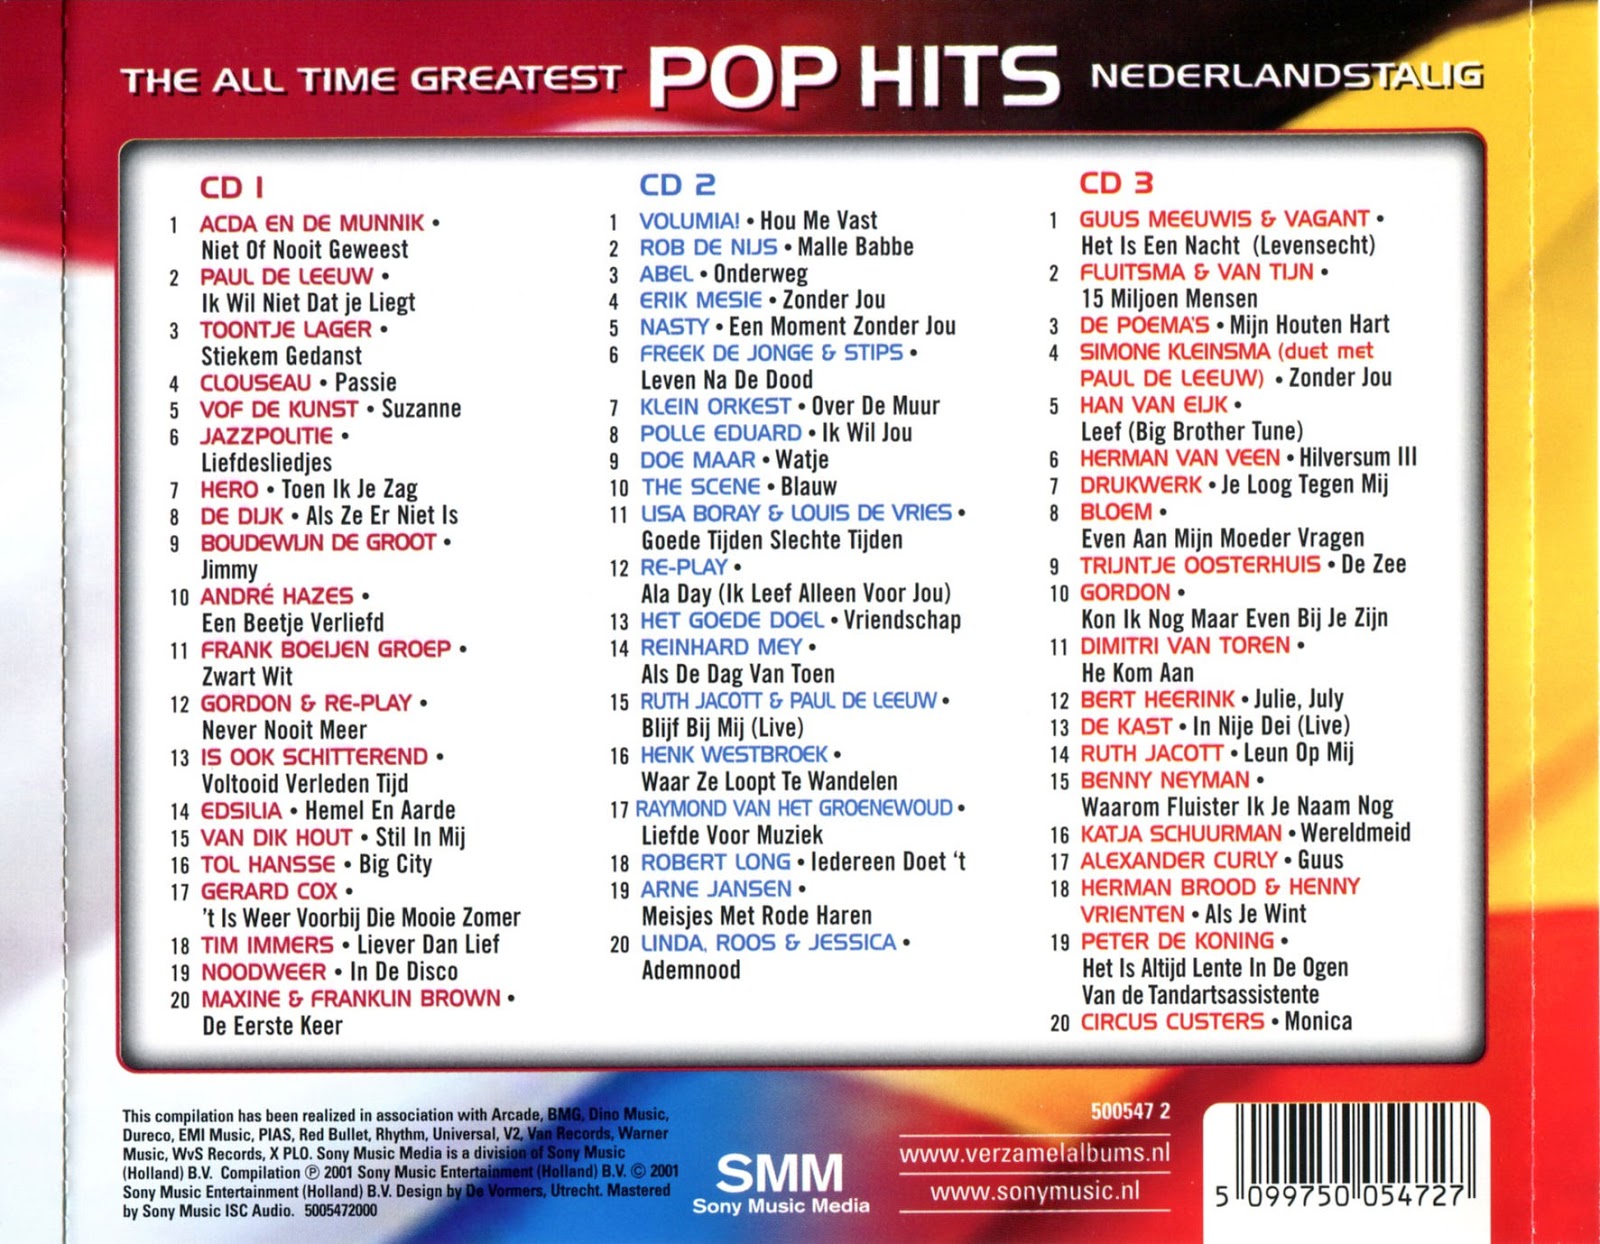 The Greatest Hits 2001 Boney M album - Wikipedia